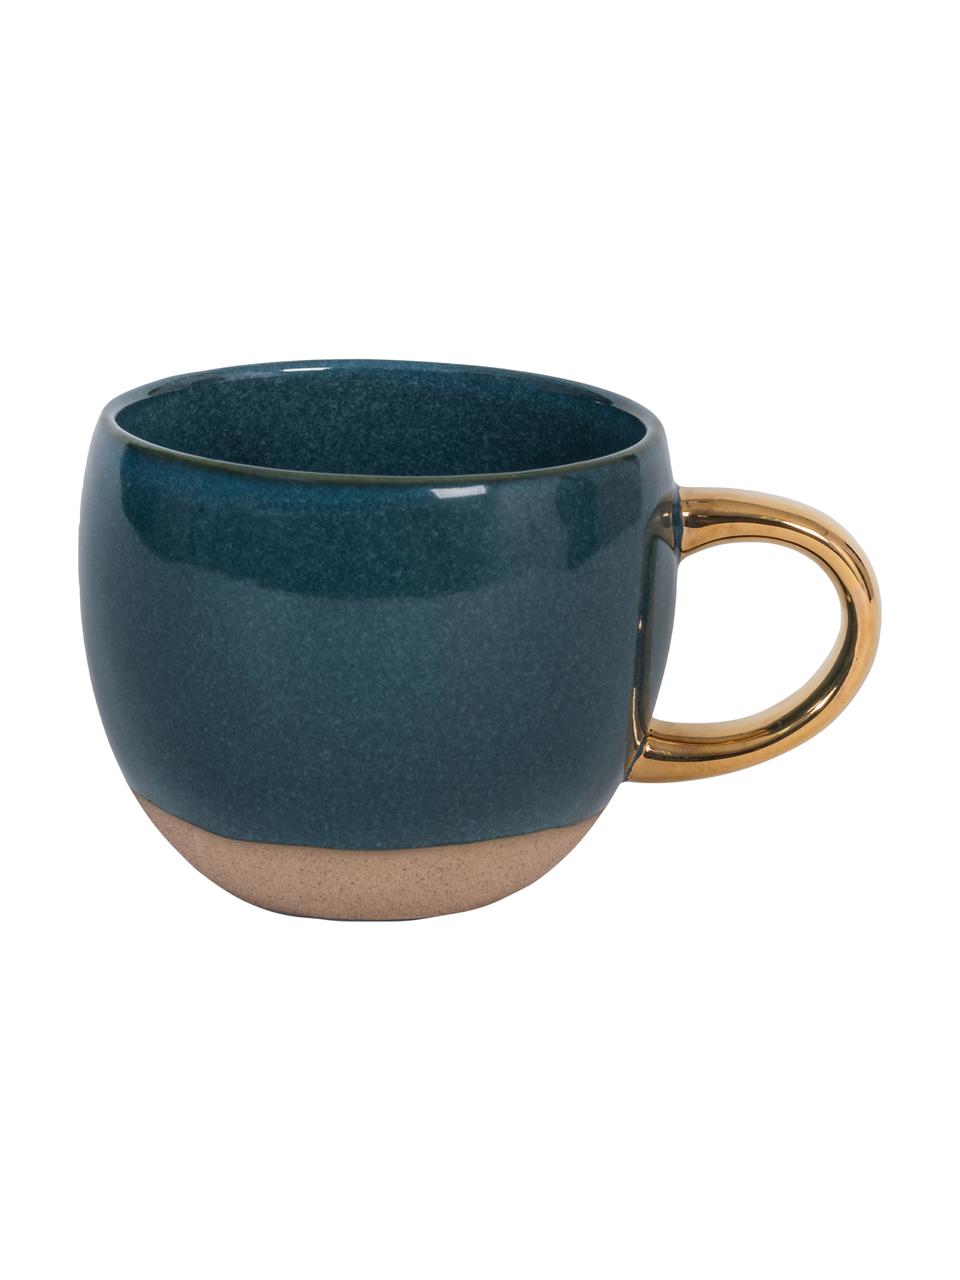 Taza de café Legion, Gres, Azul, dorado, Ø 11 x Al 9 cm, 500 ml